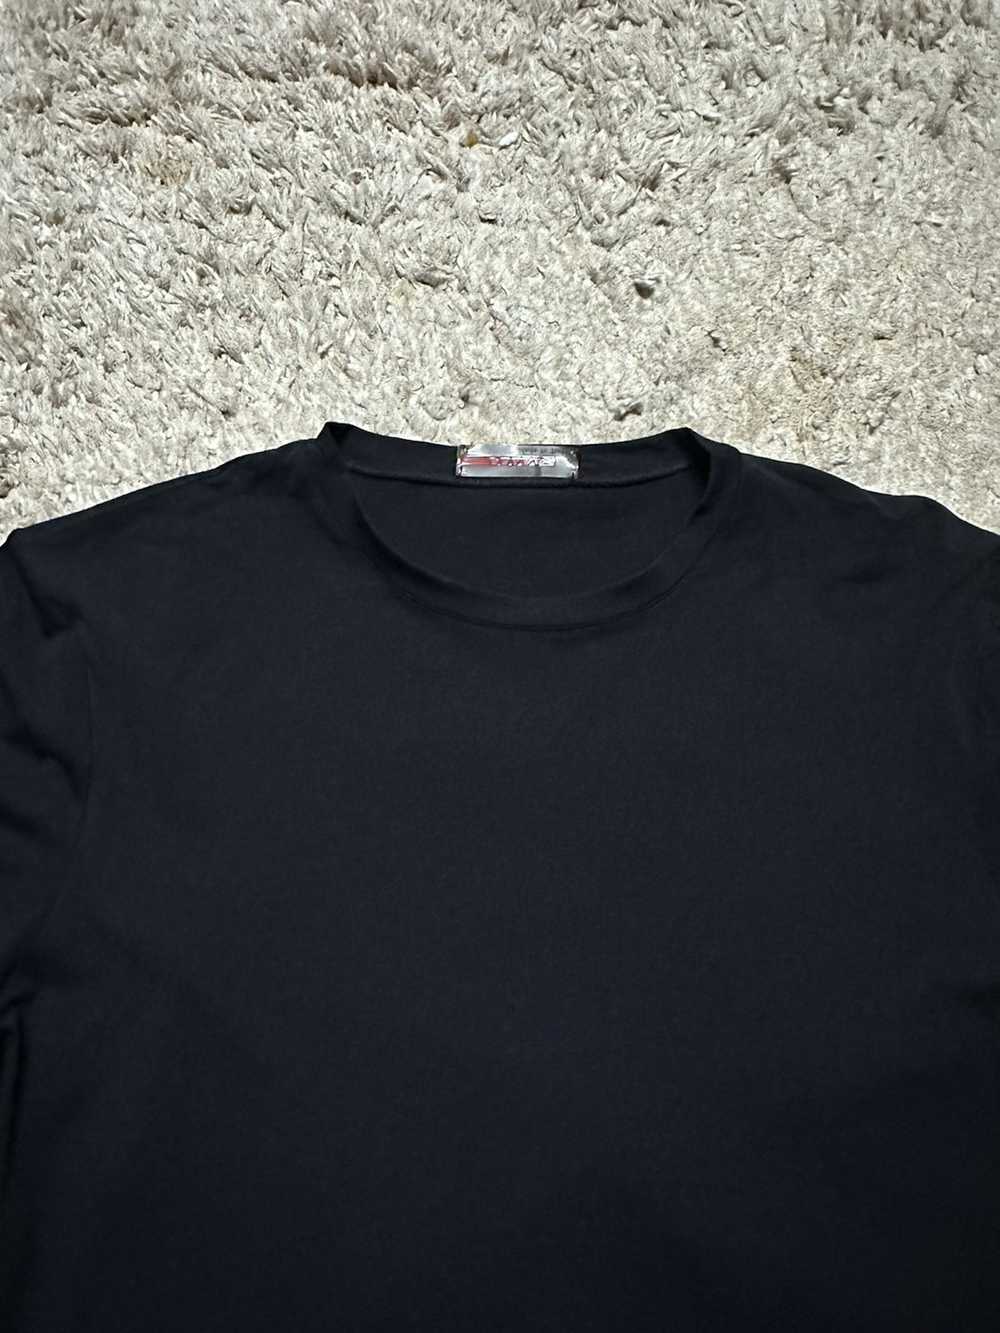 Prada × Vintage Prada Black Shirt x Vintage - image 3